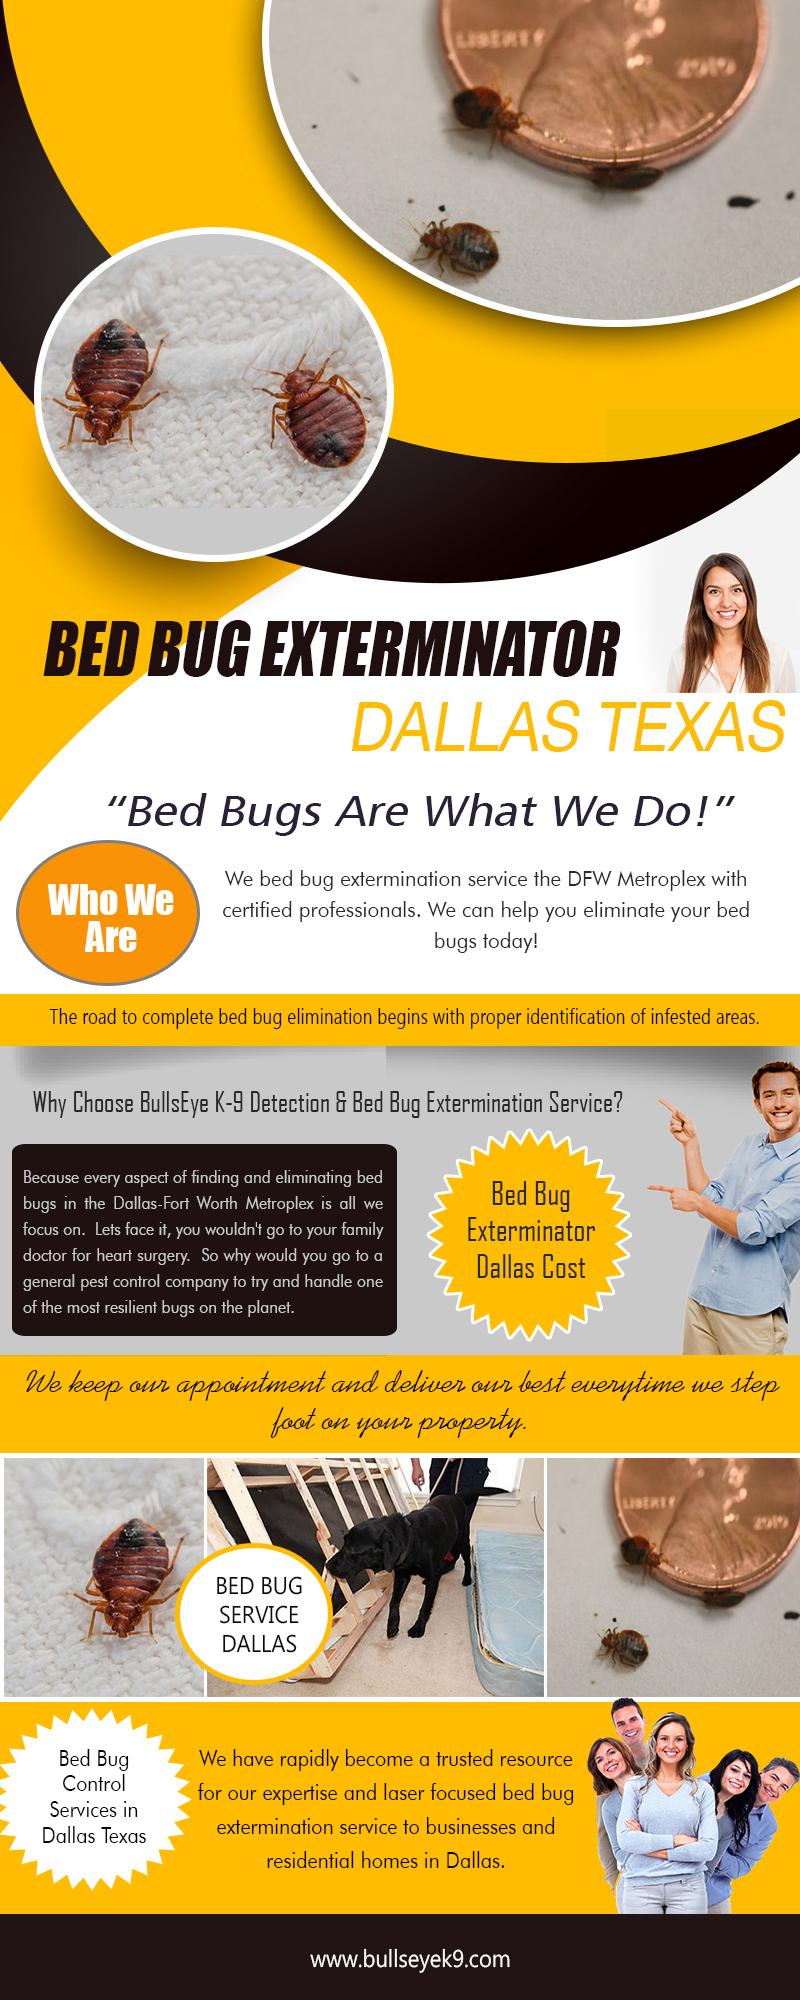 Bed Bug Exterminator Dallas Texas